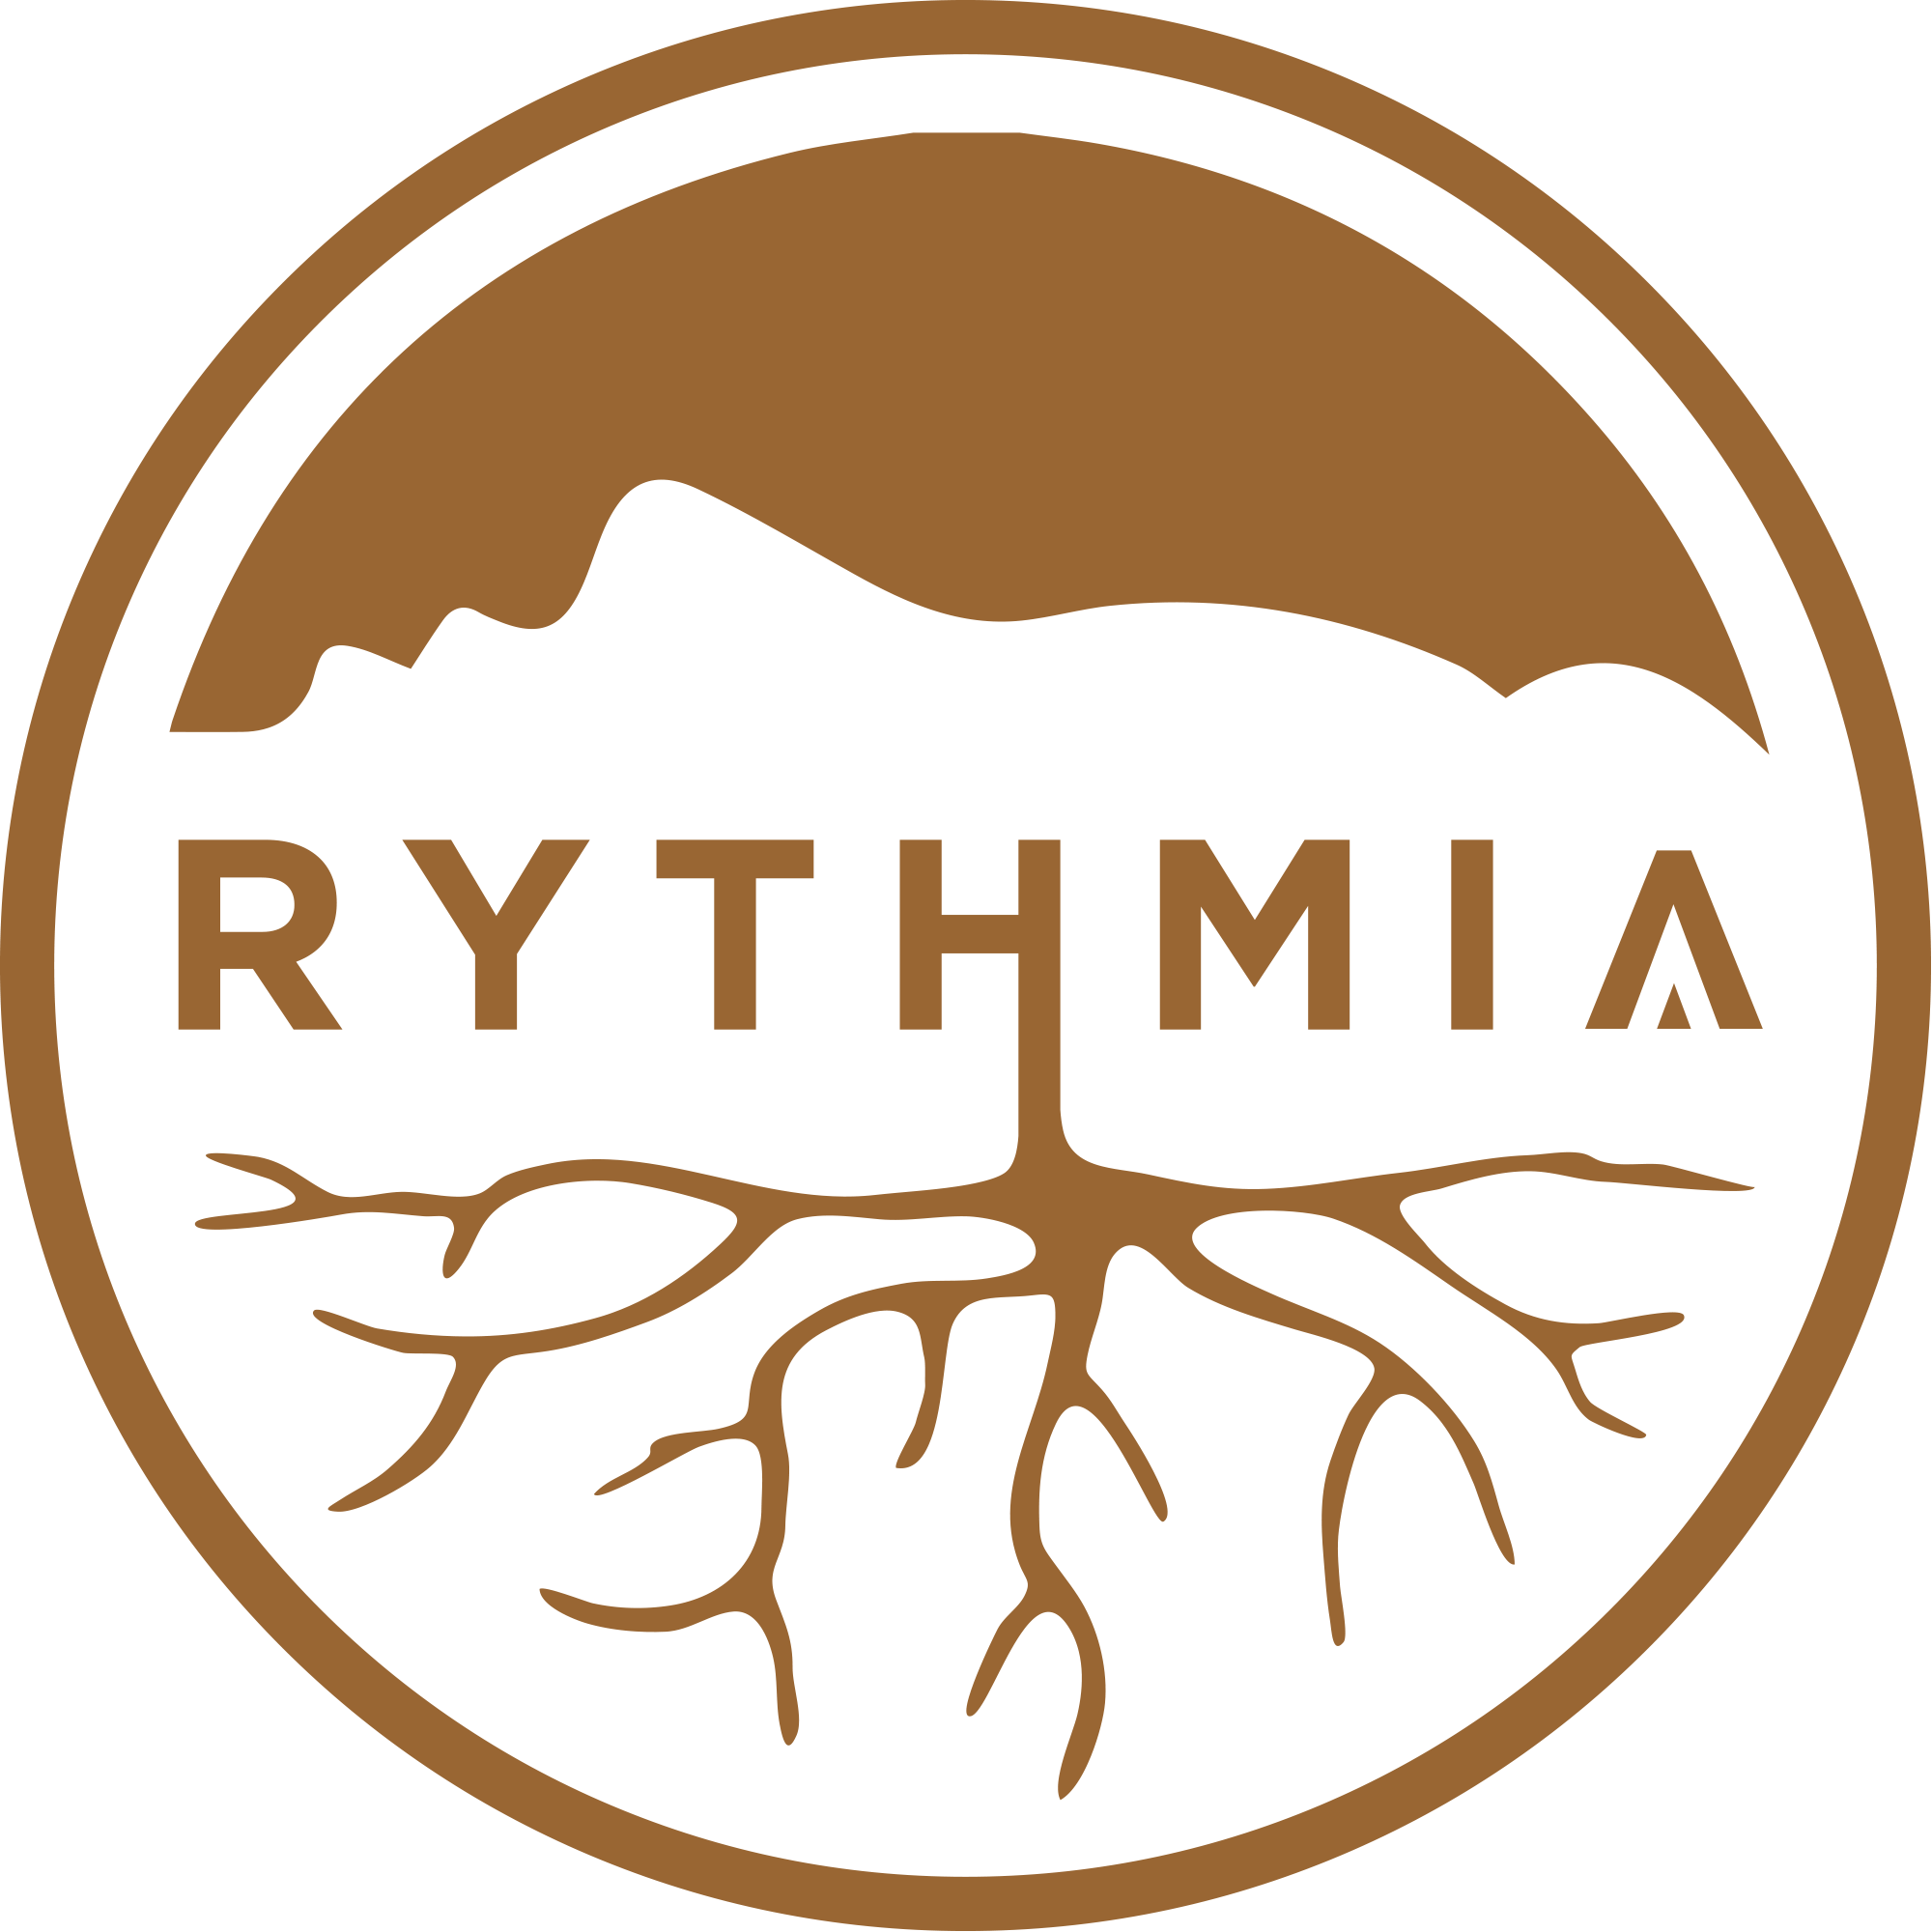 Rythmia Logo